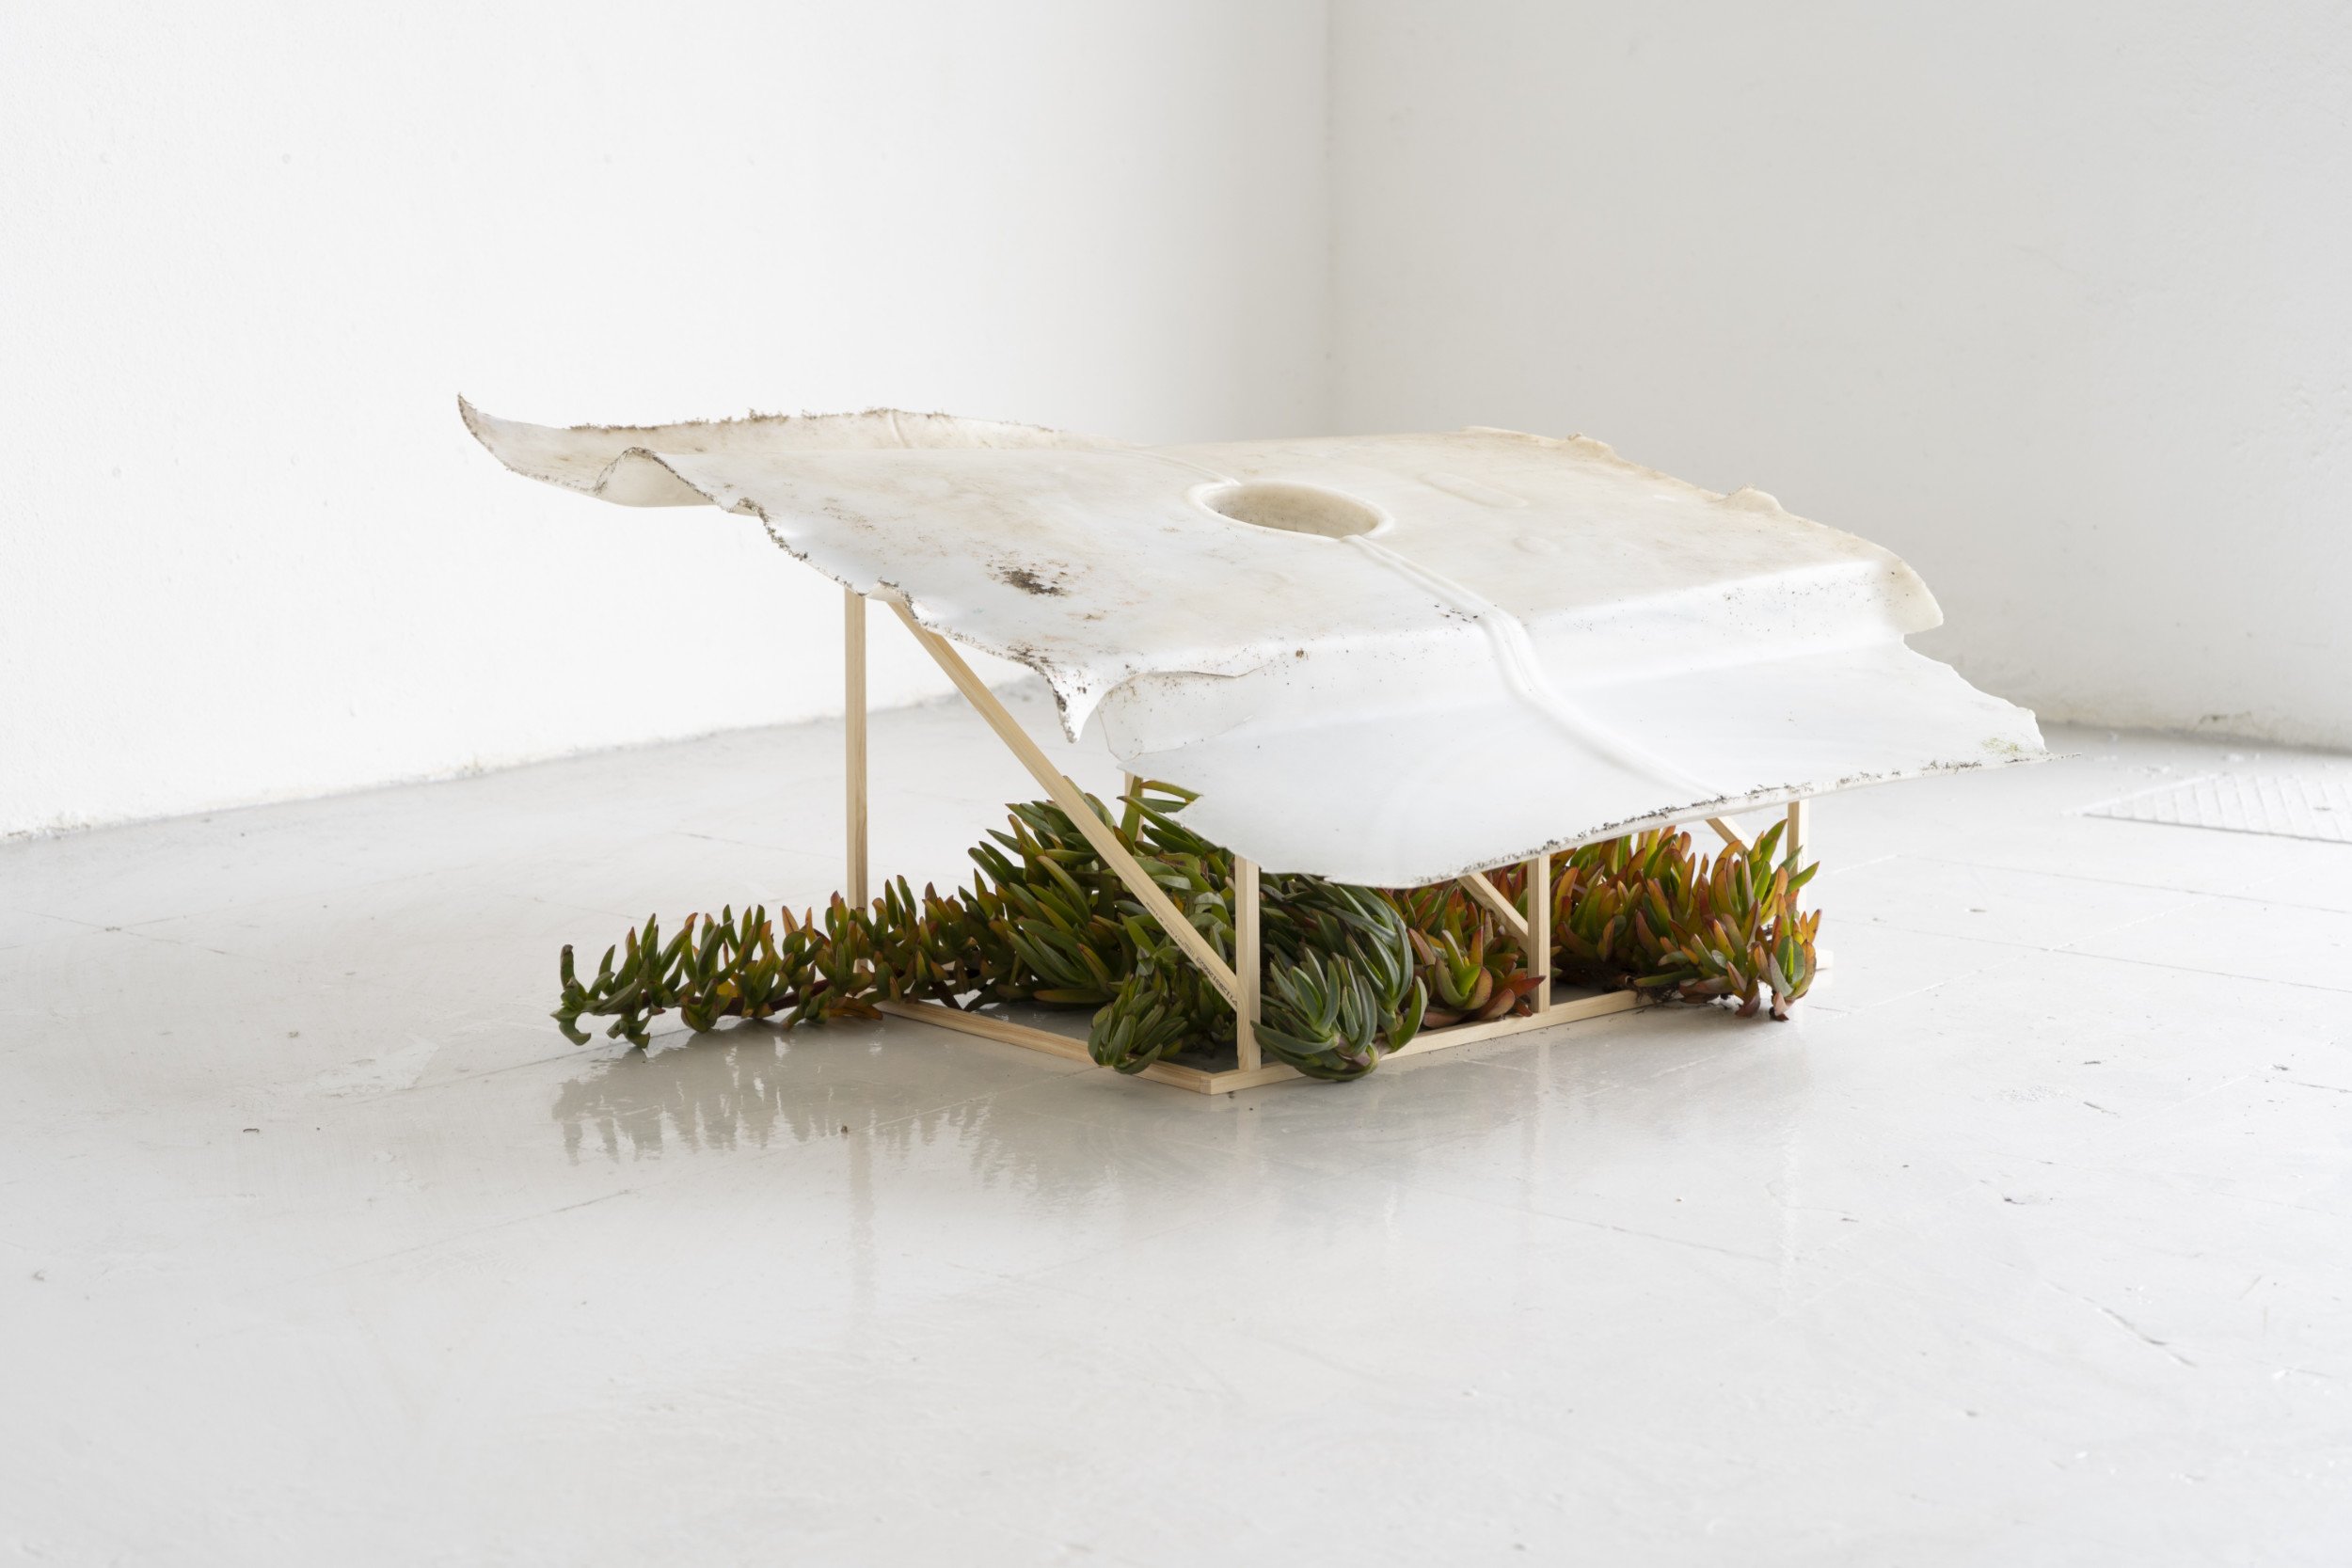  Kelly M O'Brien,  Rudera . Wood, found object (plastic), ice plant. 44 x 100 x 113 cm ©2022 